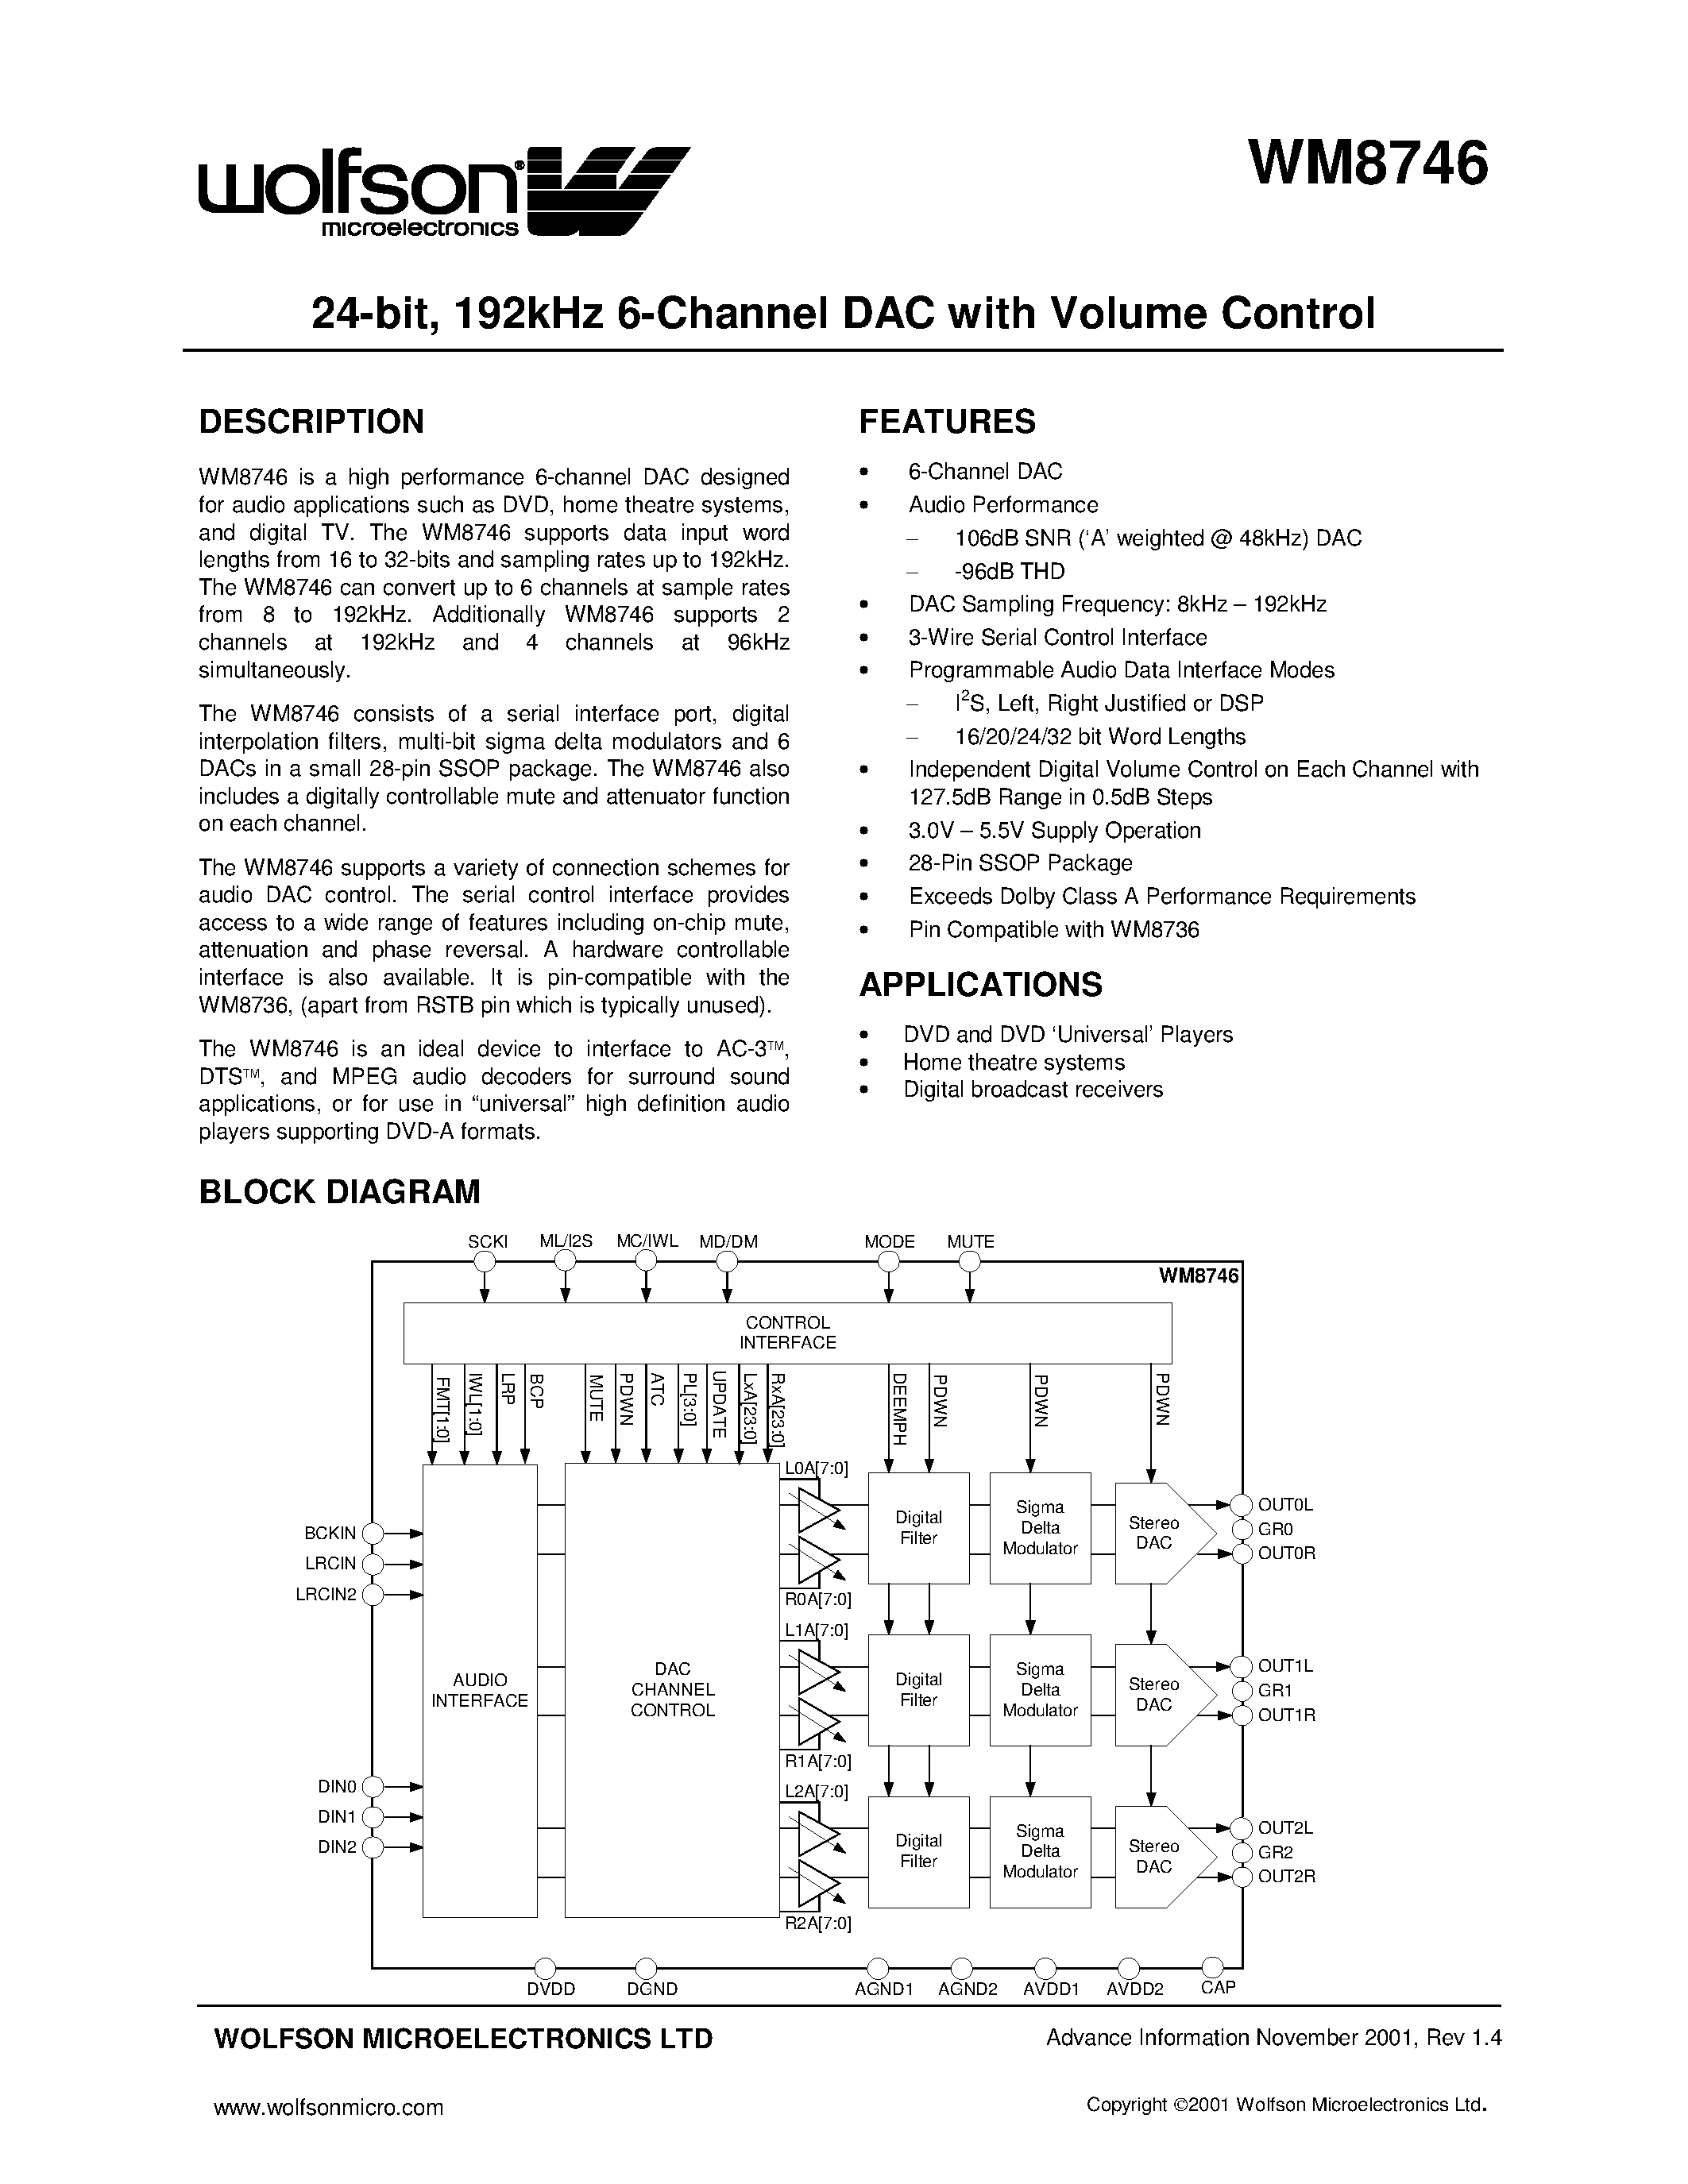 Datasheet WM8746 - 24BIT 192KHZ 6 CHANNEL DAC WITH VOLUME CONTROL page 1